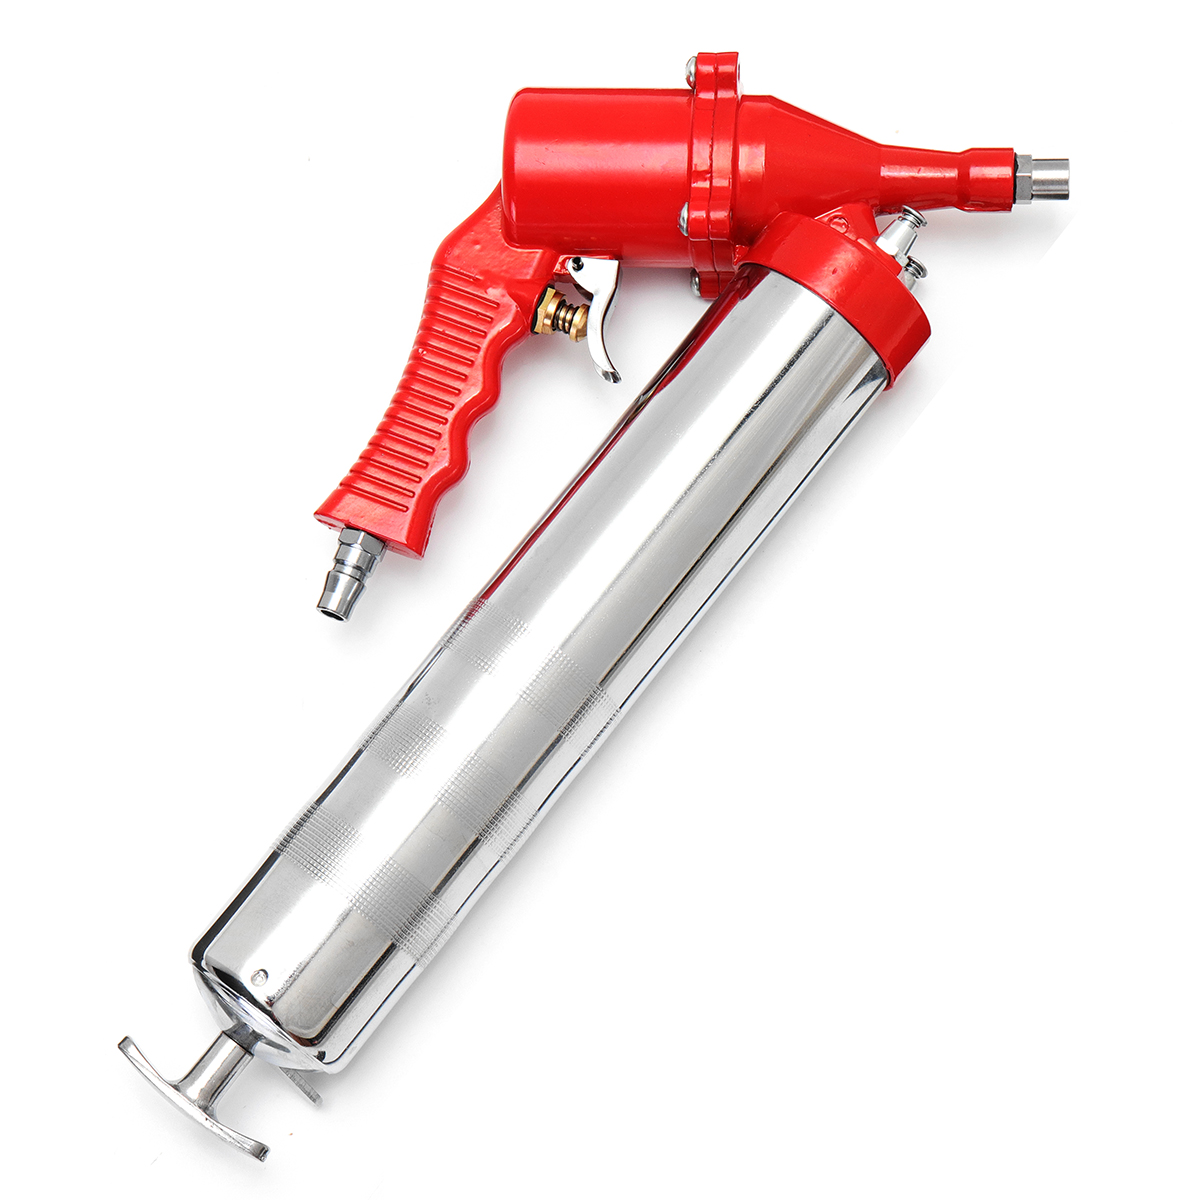 

Manual One-Hand Grip Air Pneumatic Compressor Pump Grease Gun Red